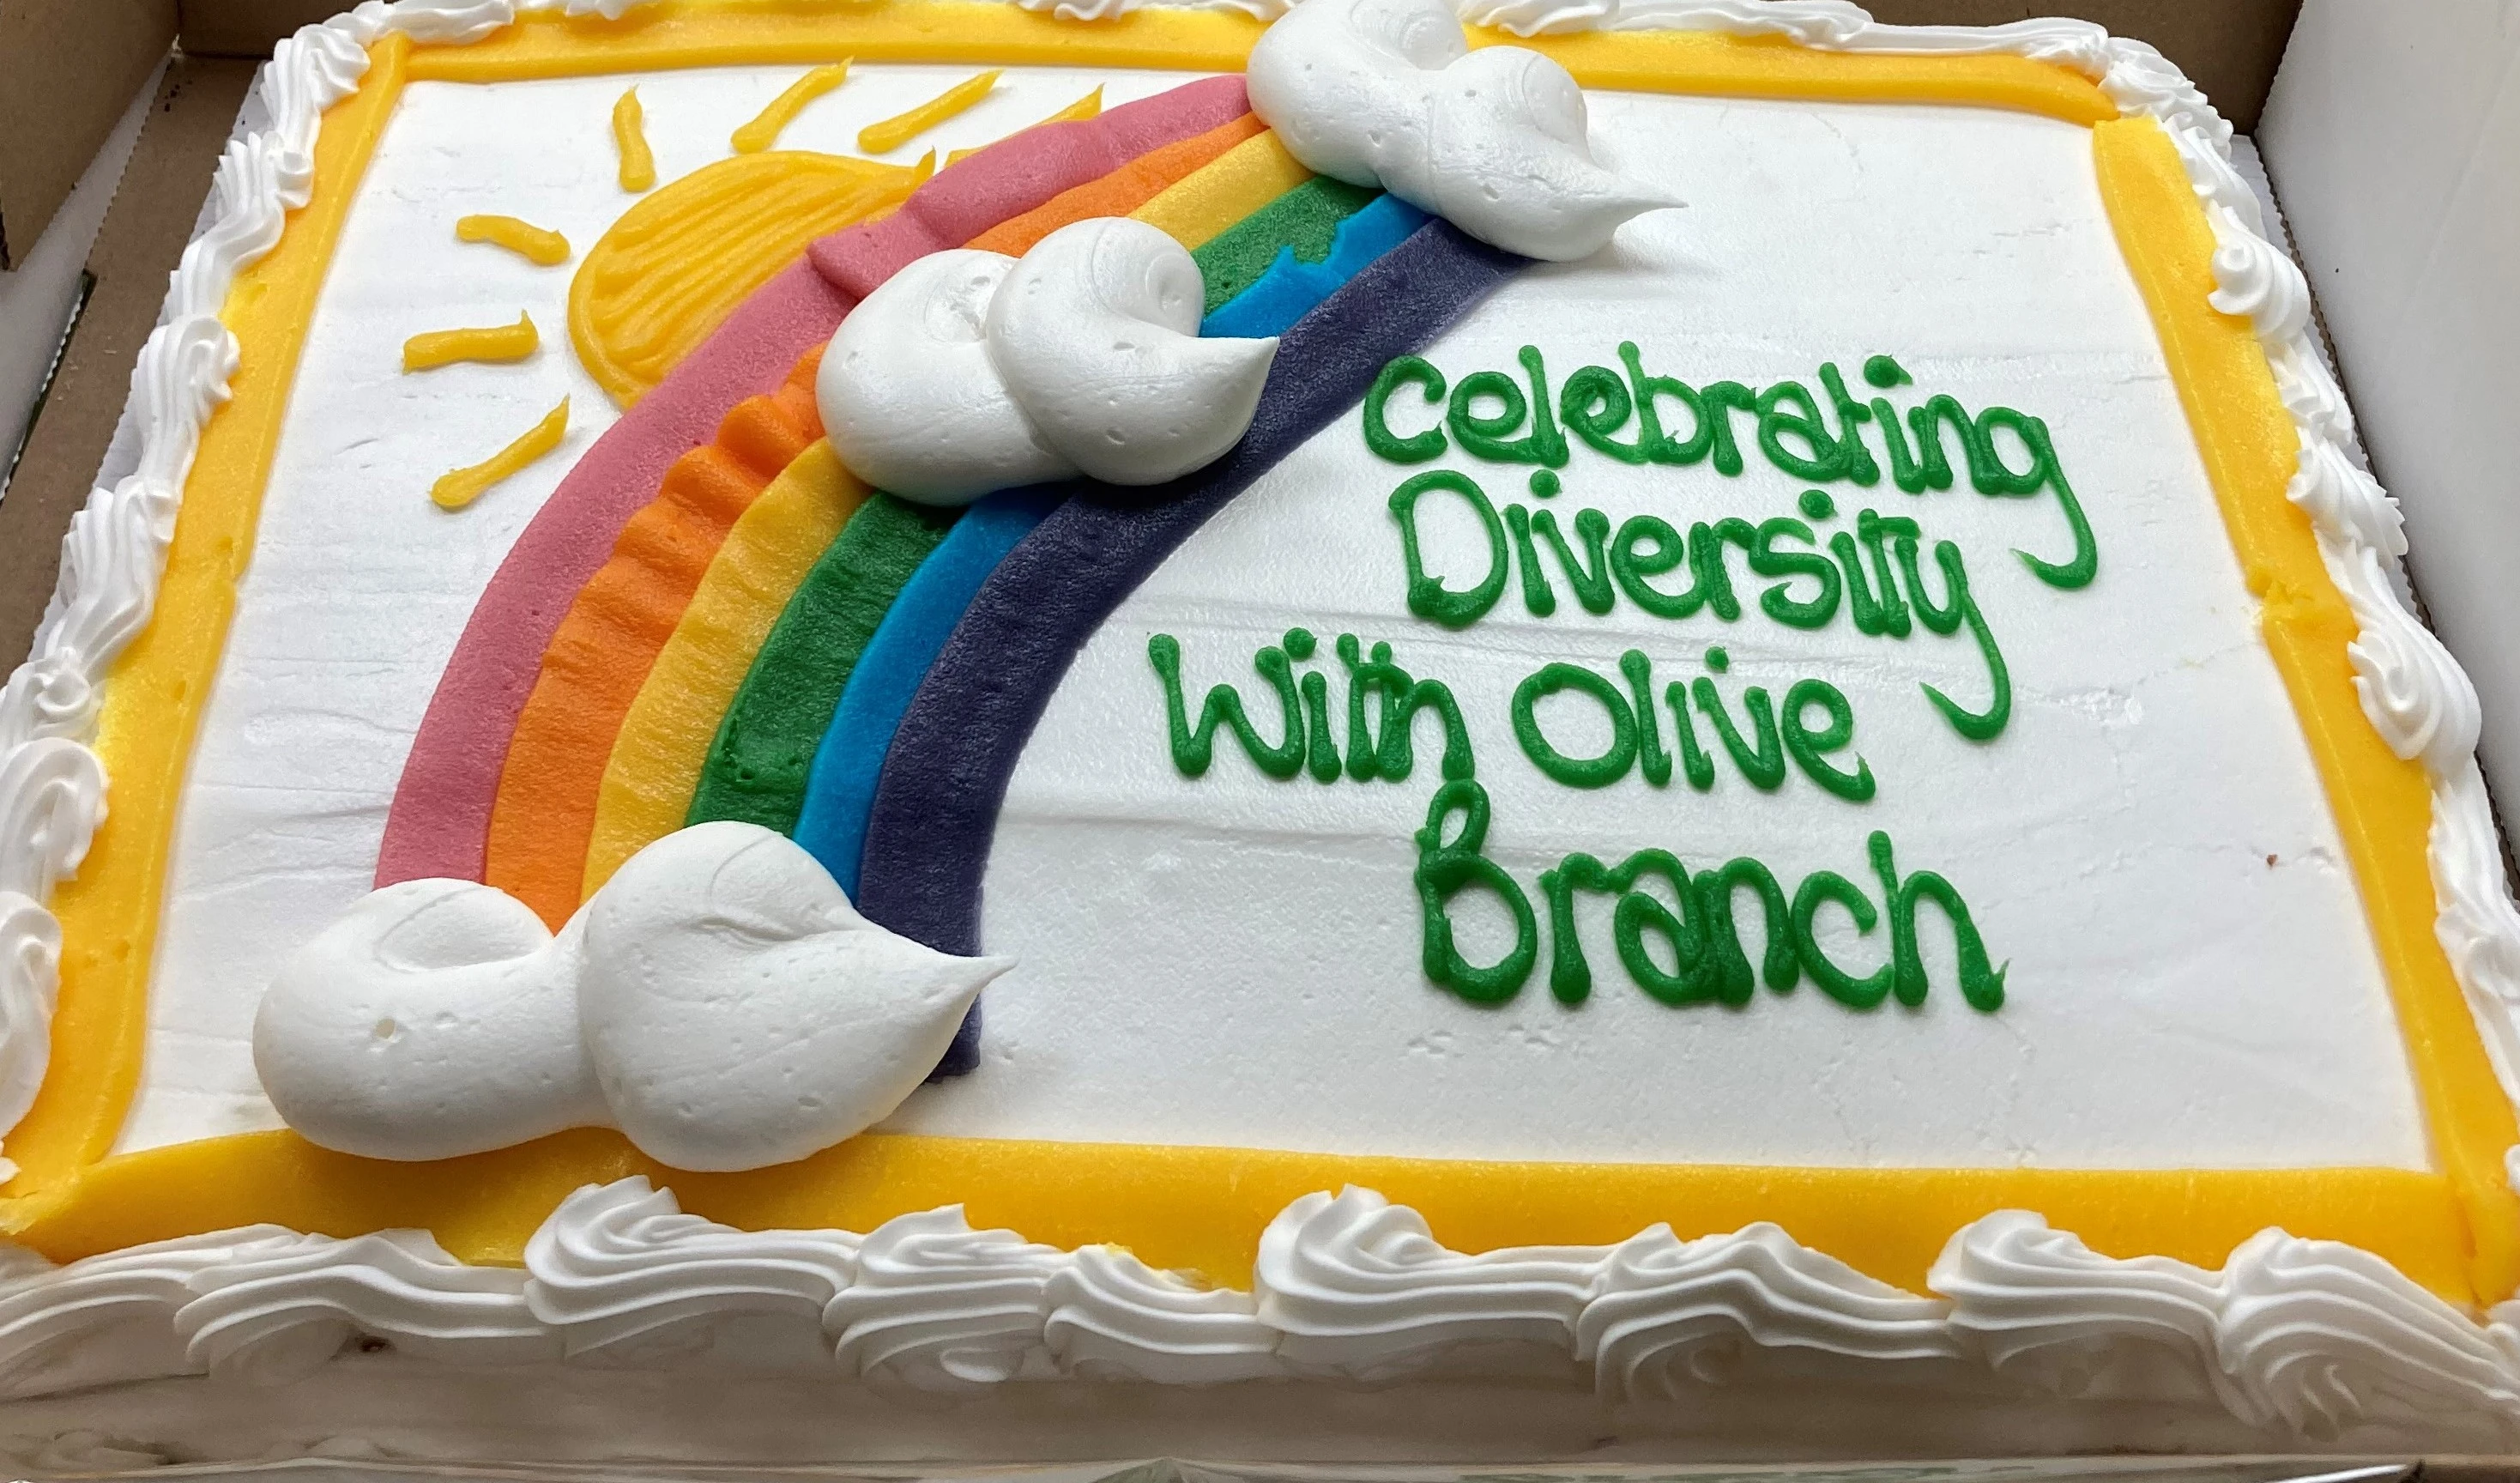 Diversity Day Cake